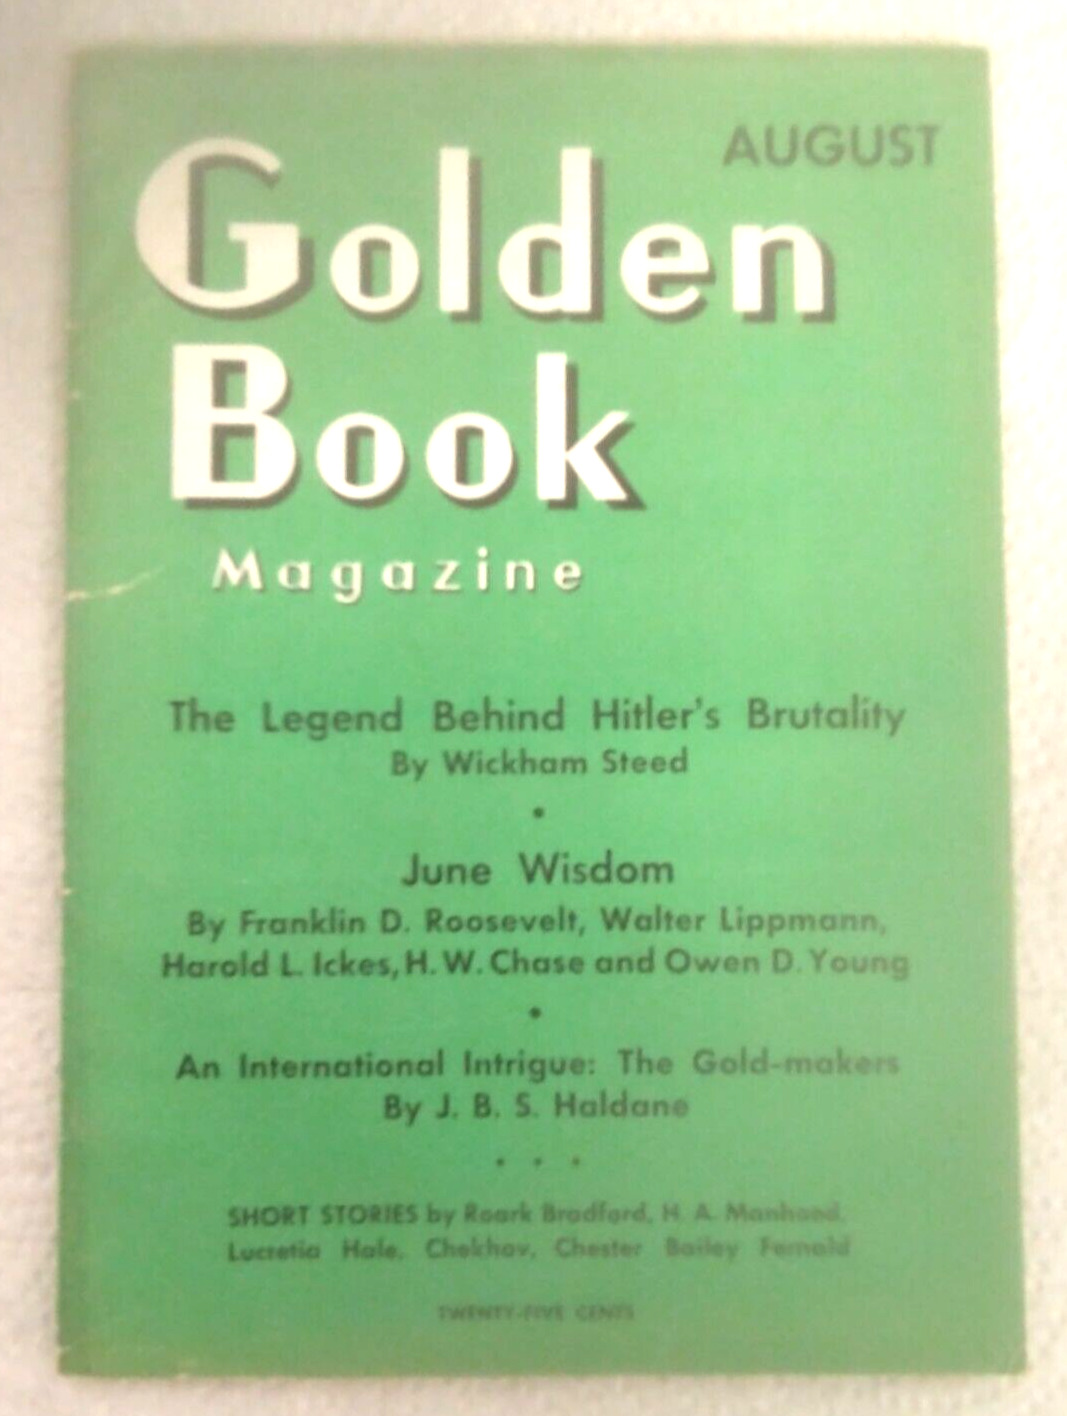 The Golden Book Magazine - August 1934